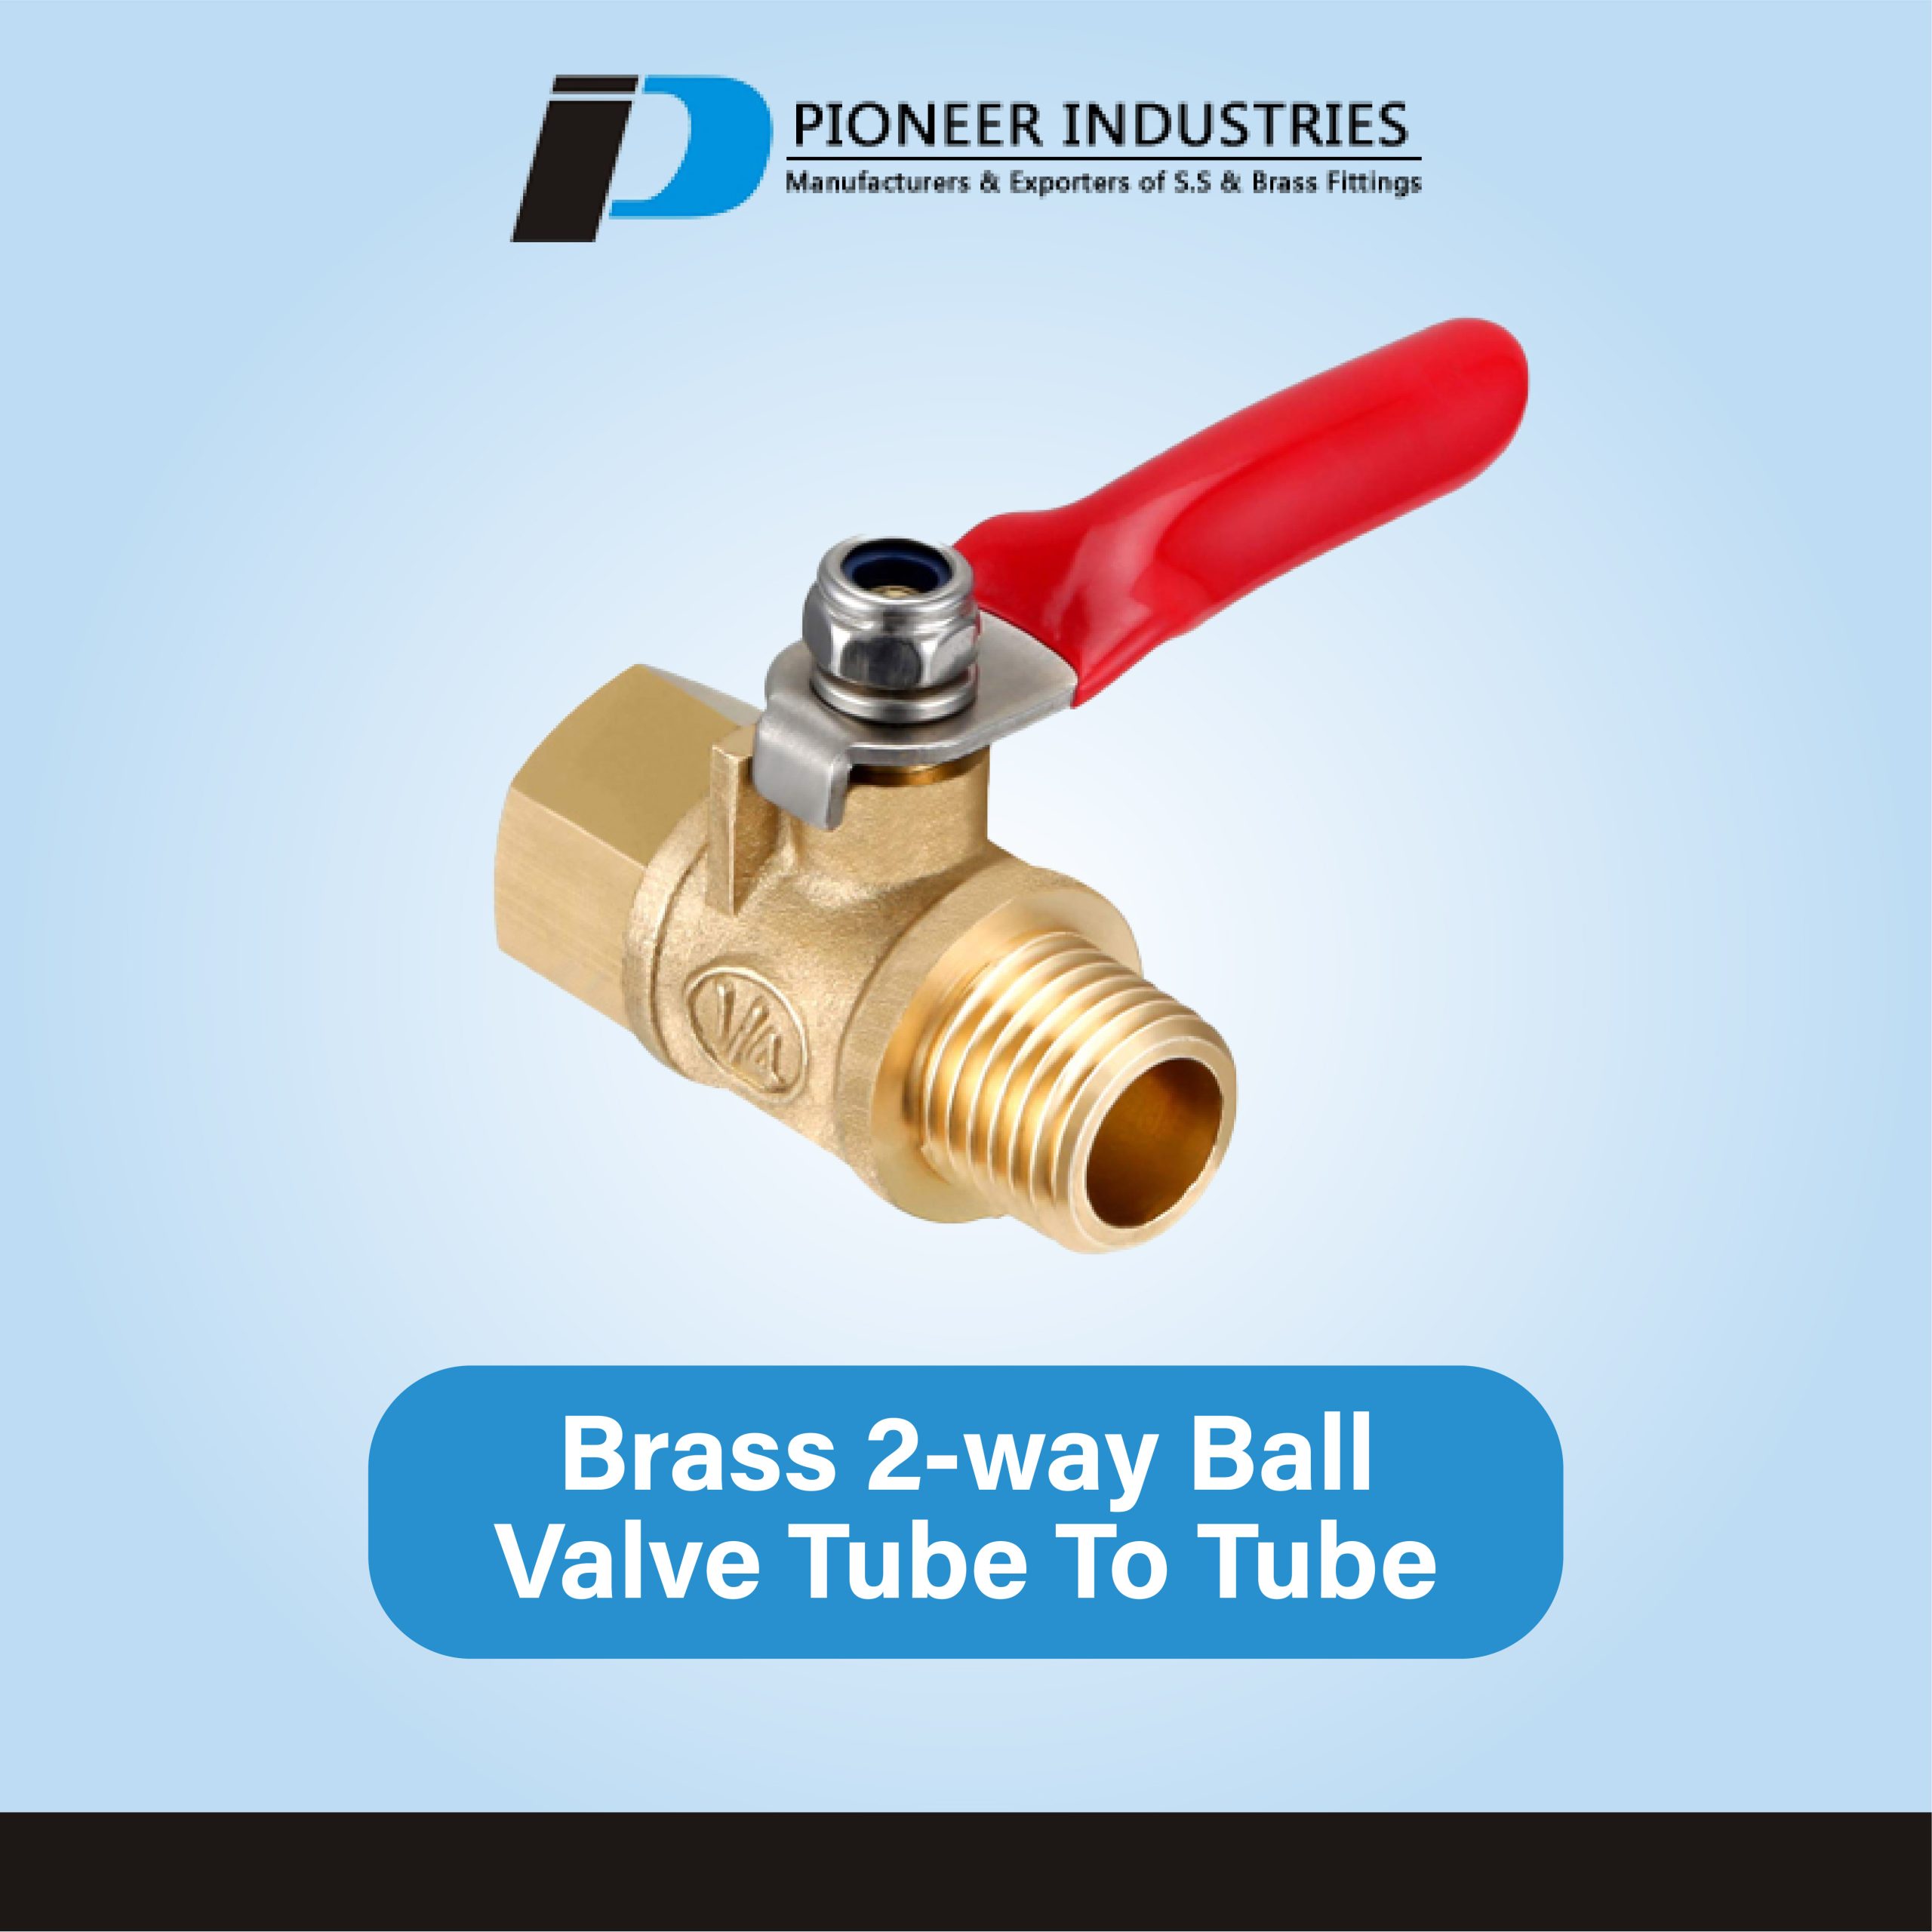 Brass 2-way Ball Valve Tube To Tube